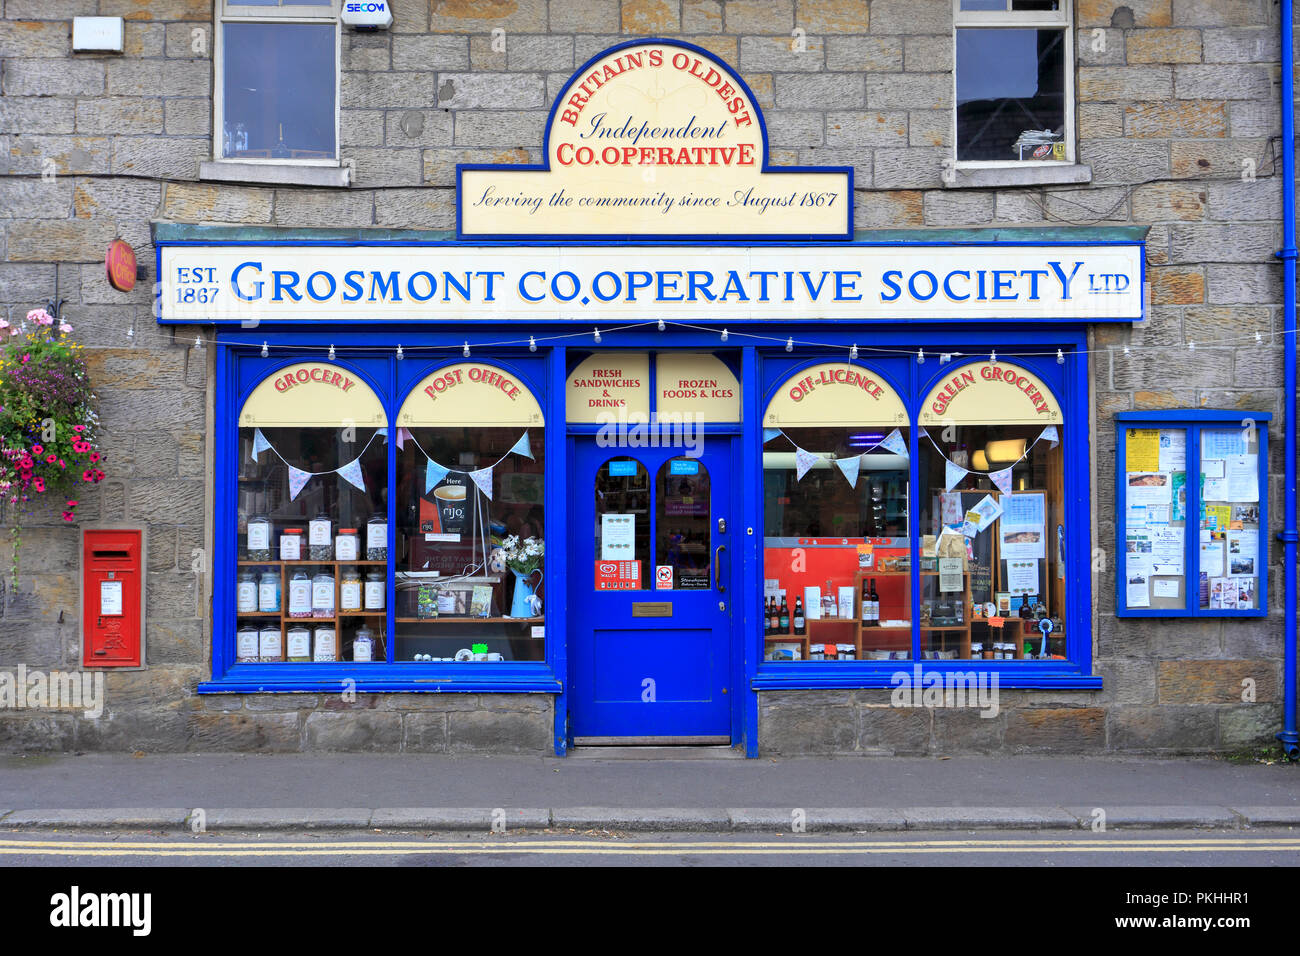 Grosmont Cooperative Society Ltd, Britain's oldest Independent Cooperative, Grosmont, North Yorkshire, England, UK. Stock Photo